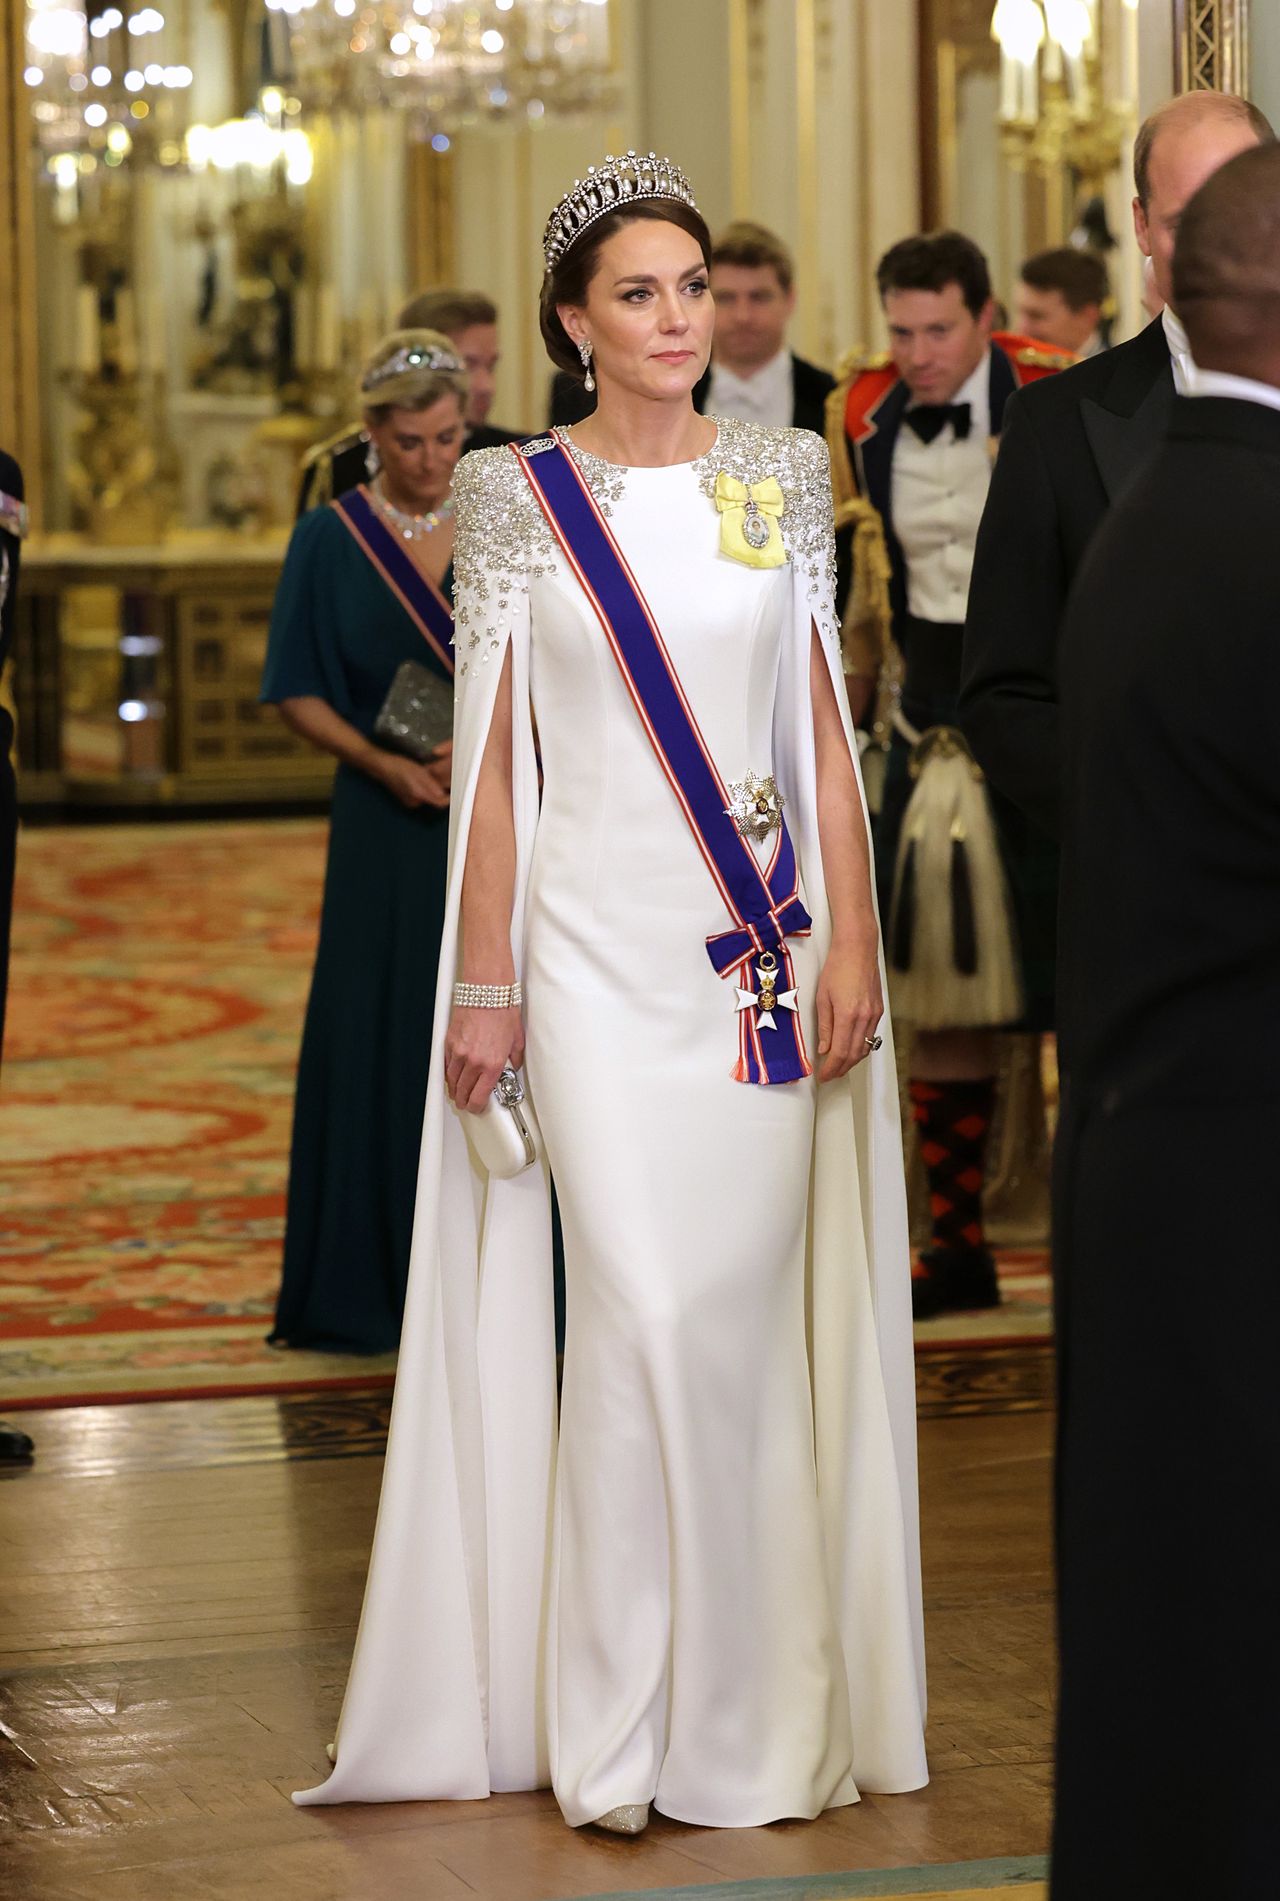 Princess Kate at a banquet in Buckingham Palace